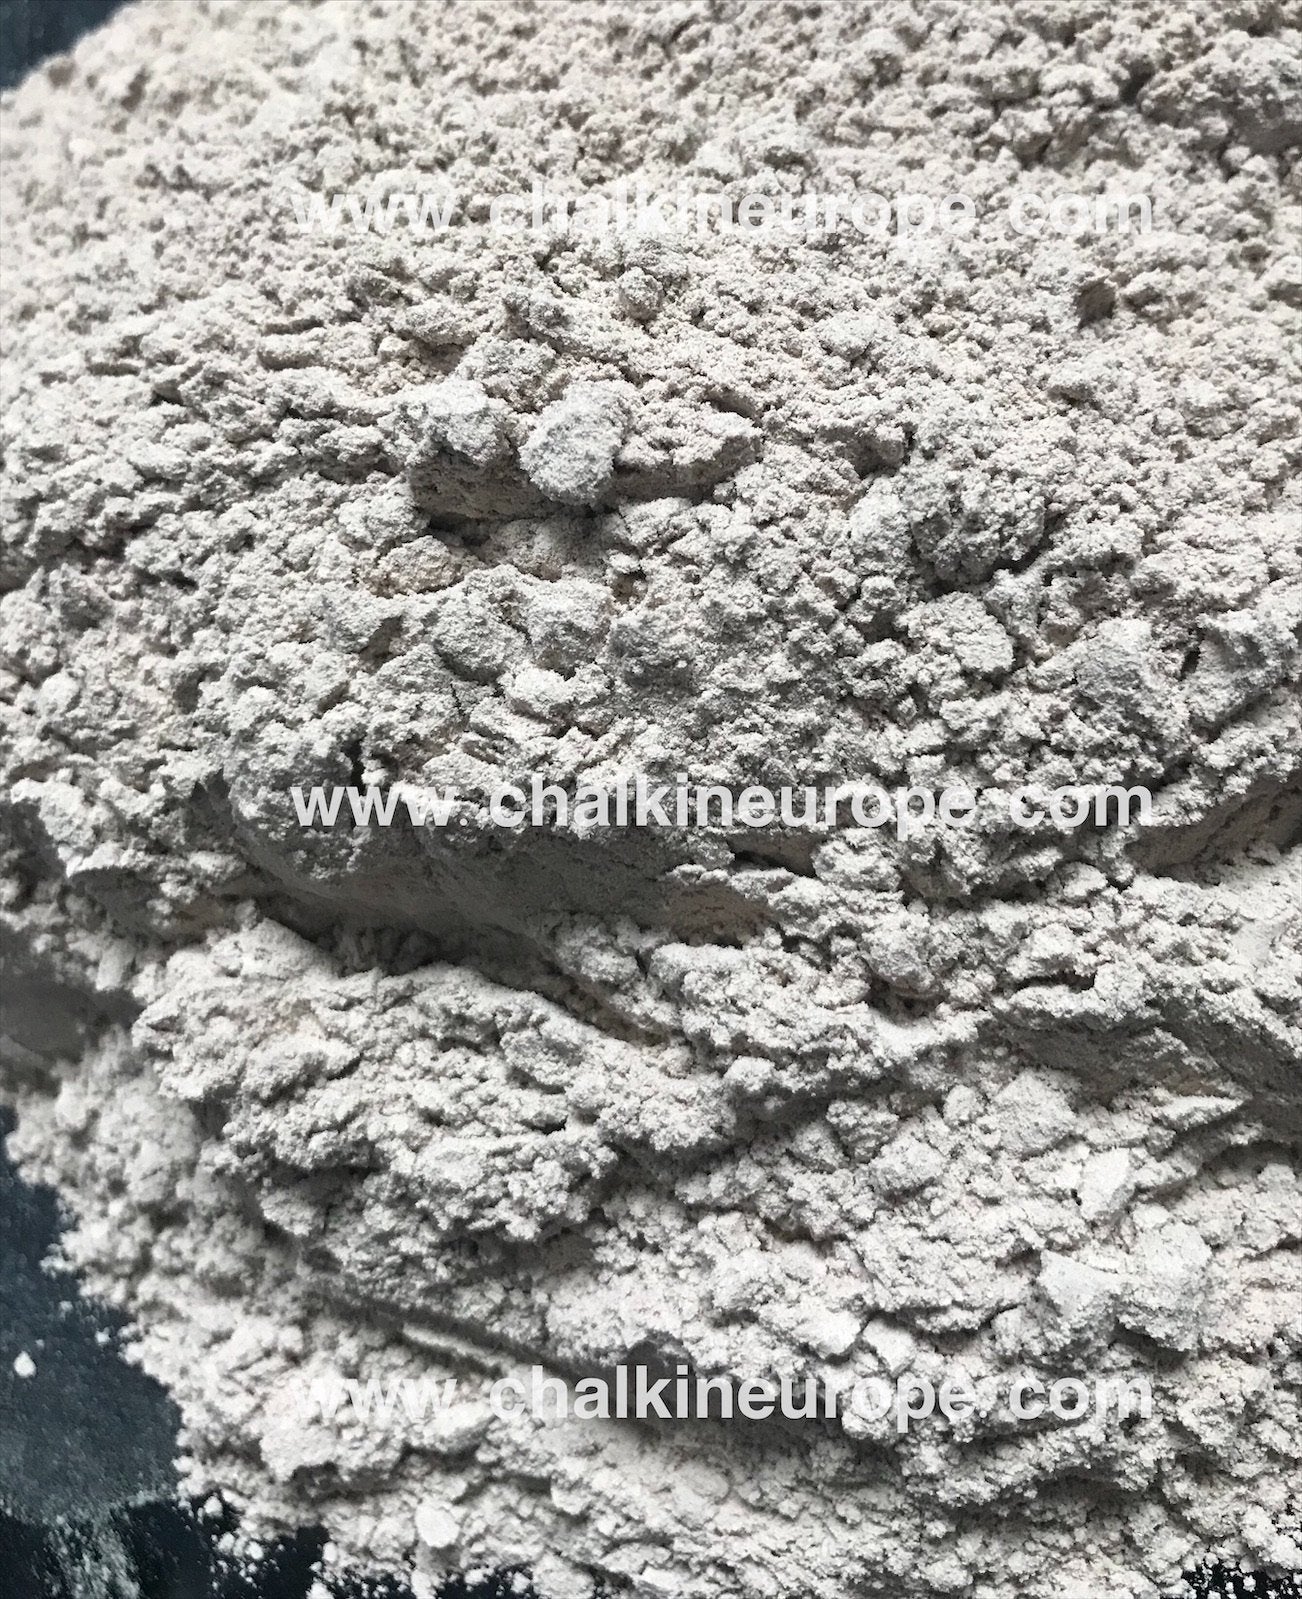 Edible Bentonite Clay - Chalkineurope